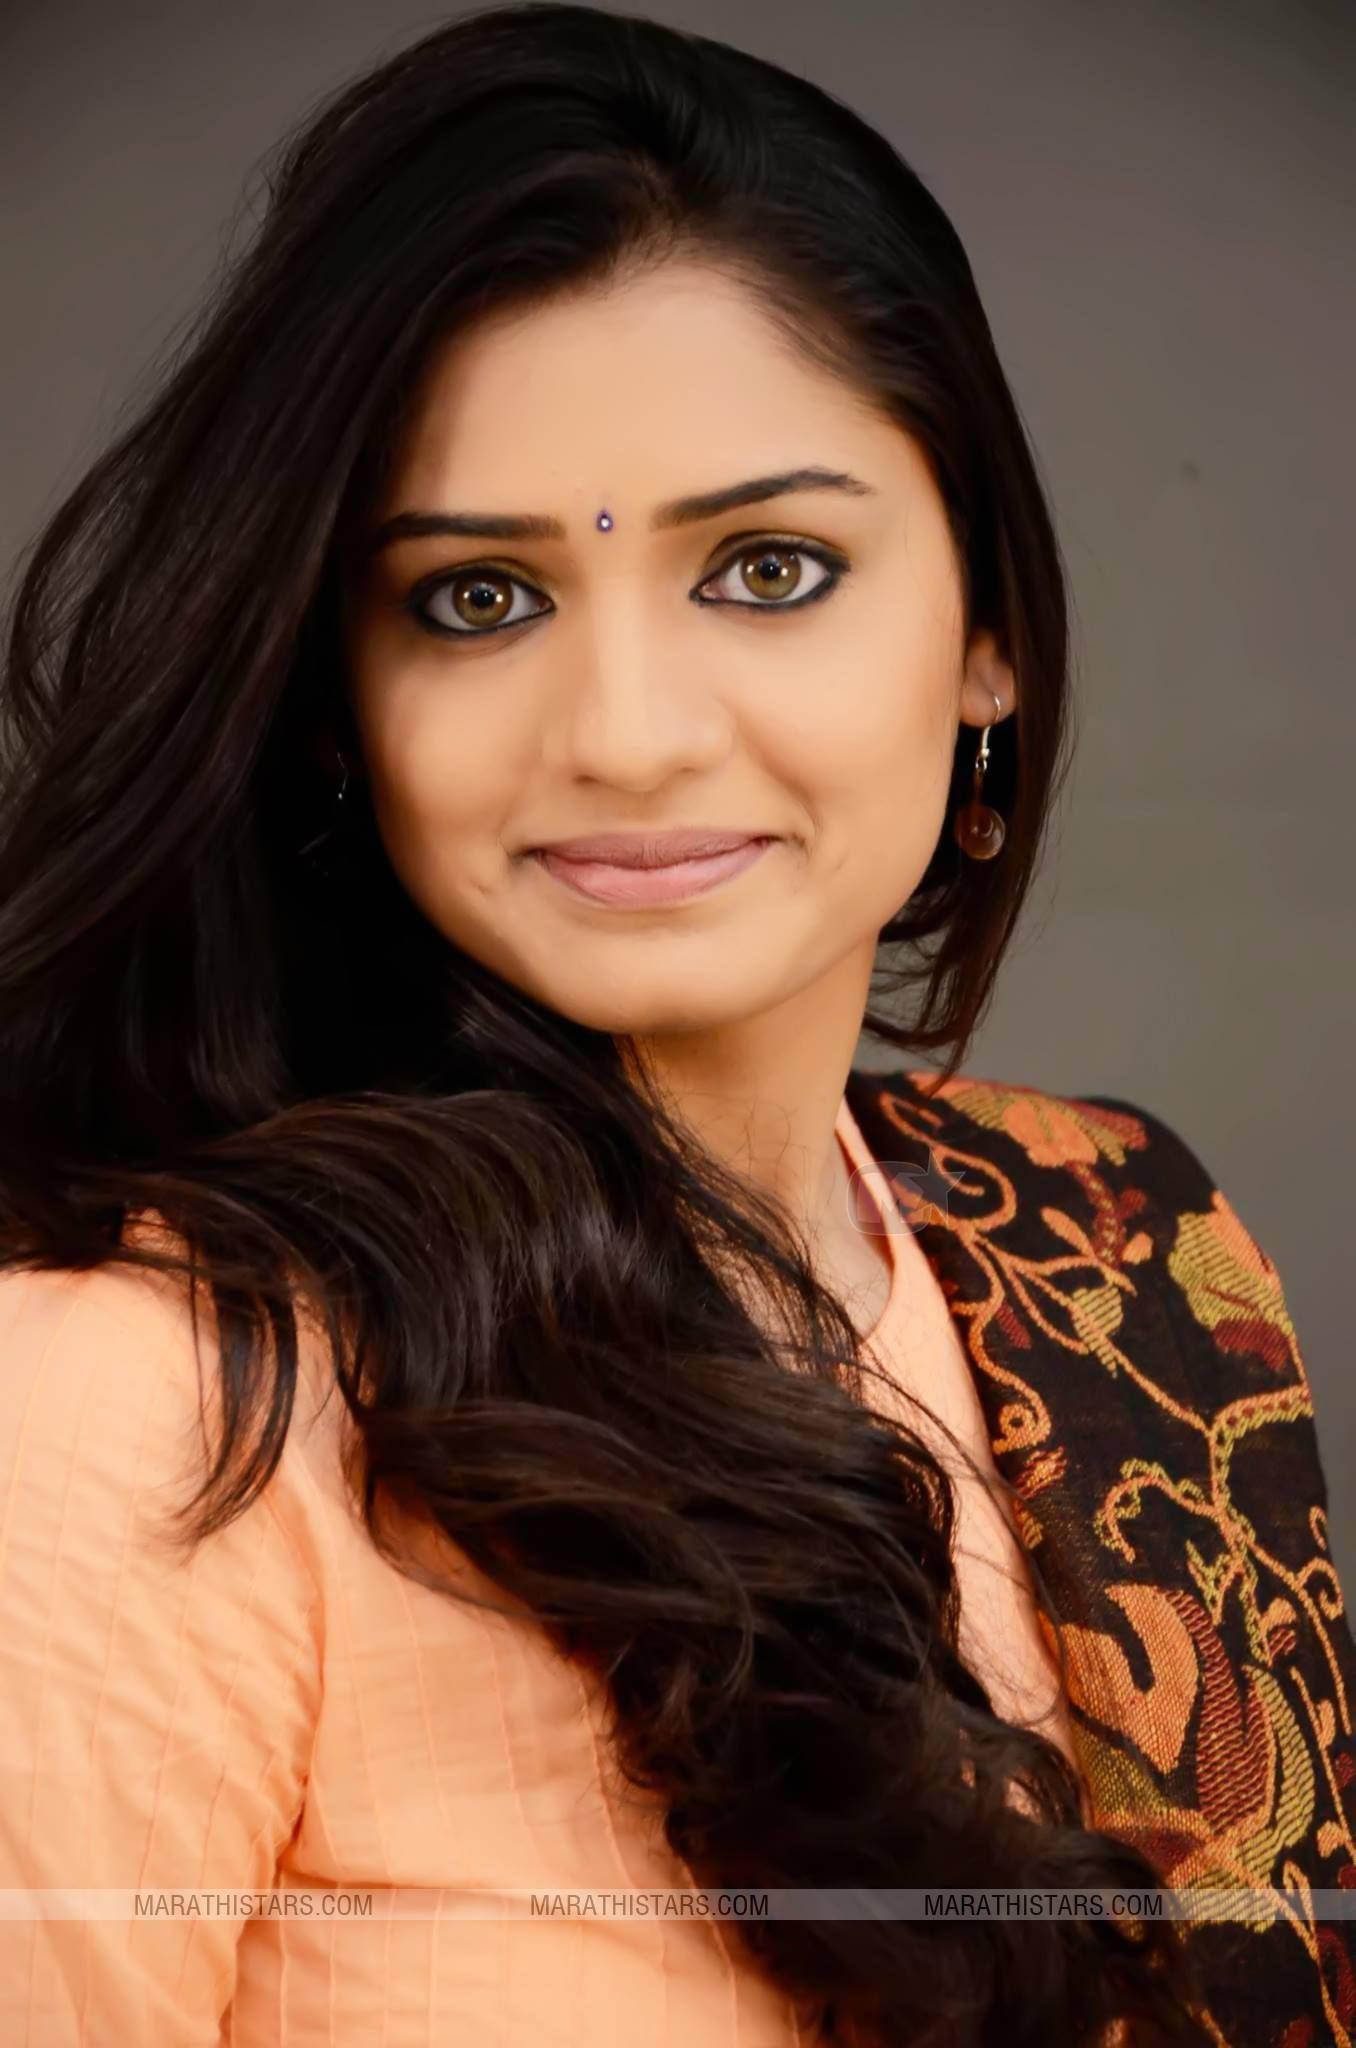 Hruta Durgule Marathi Actress Photo, Biography, Wiki, Vaidehi